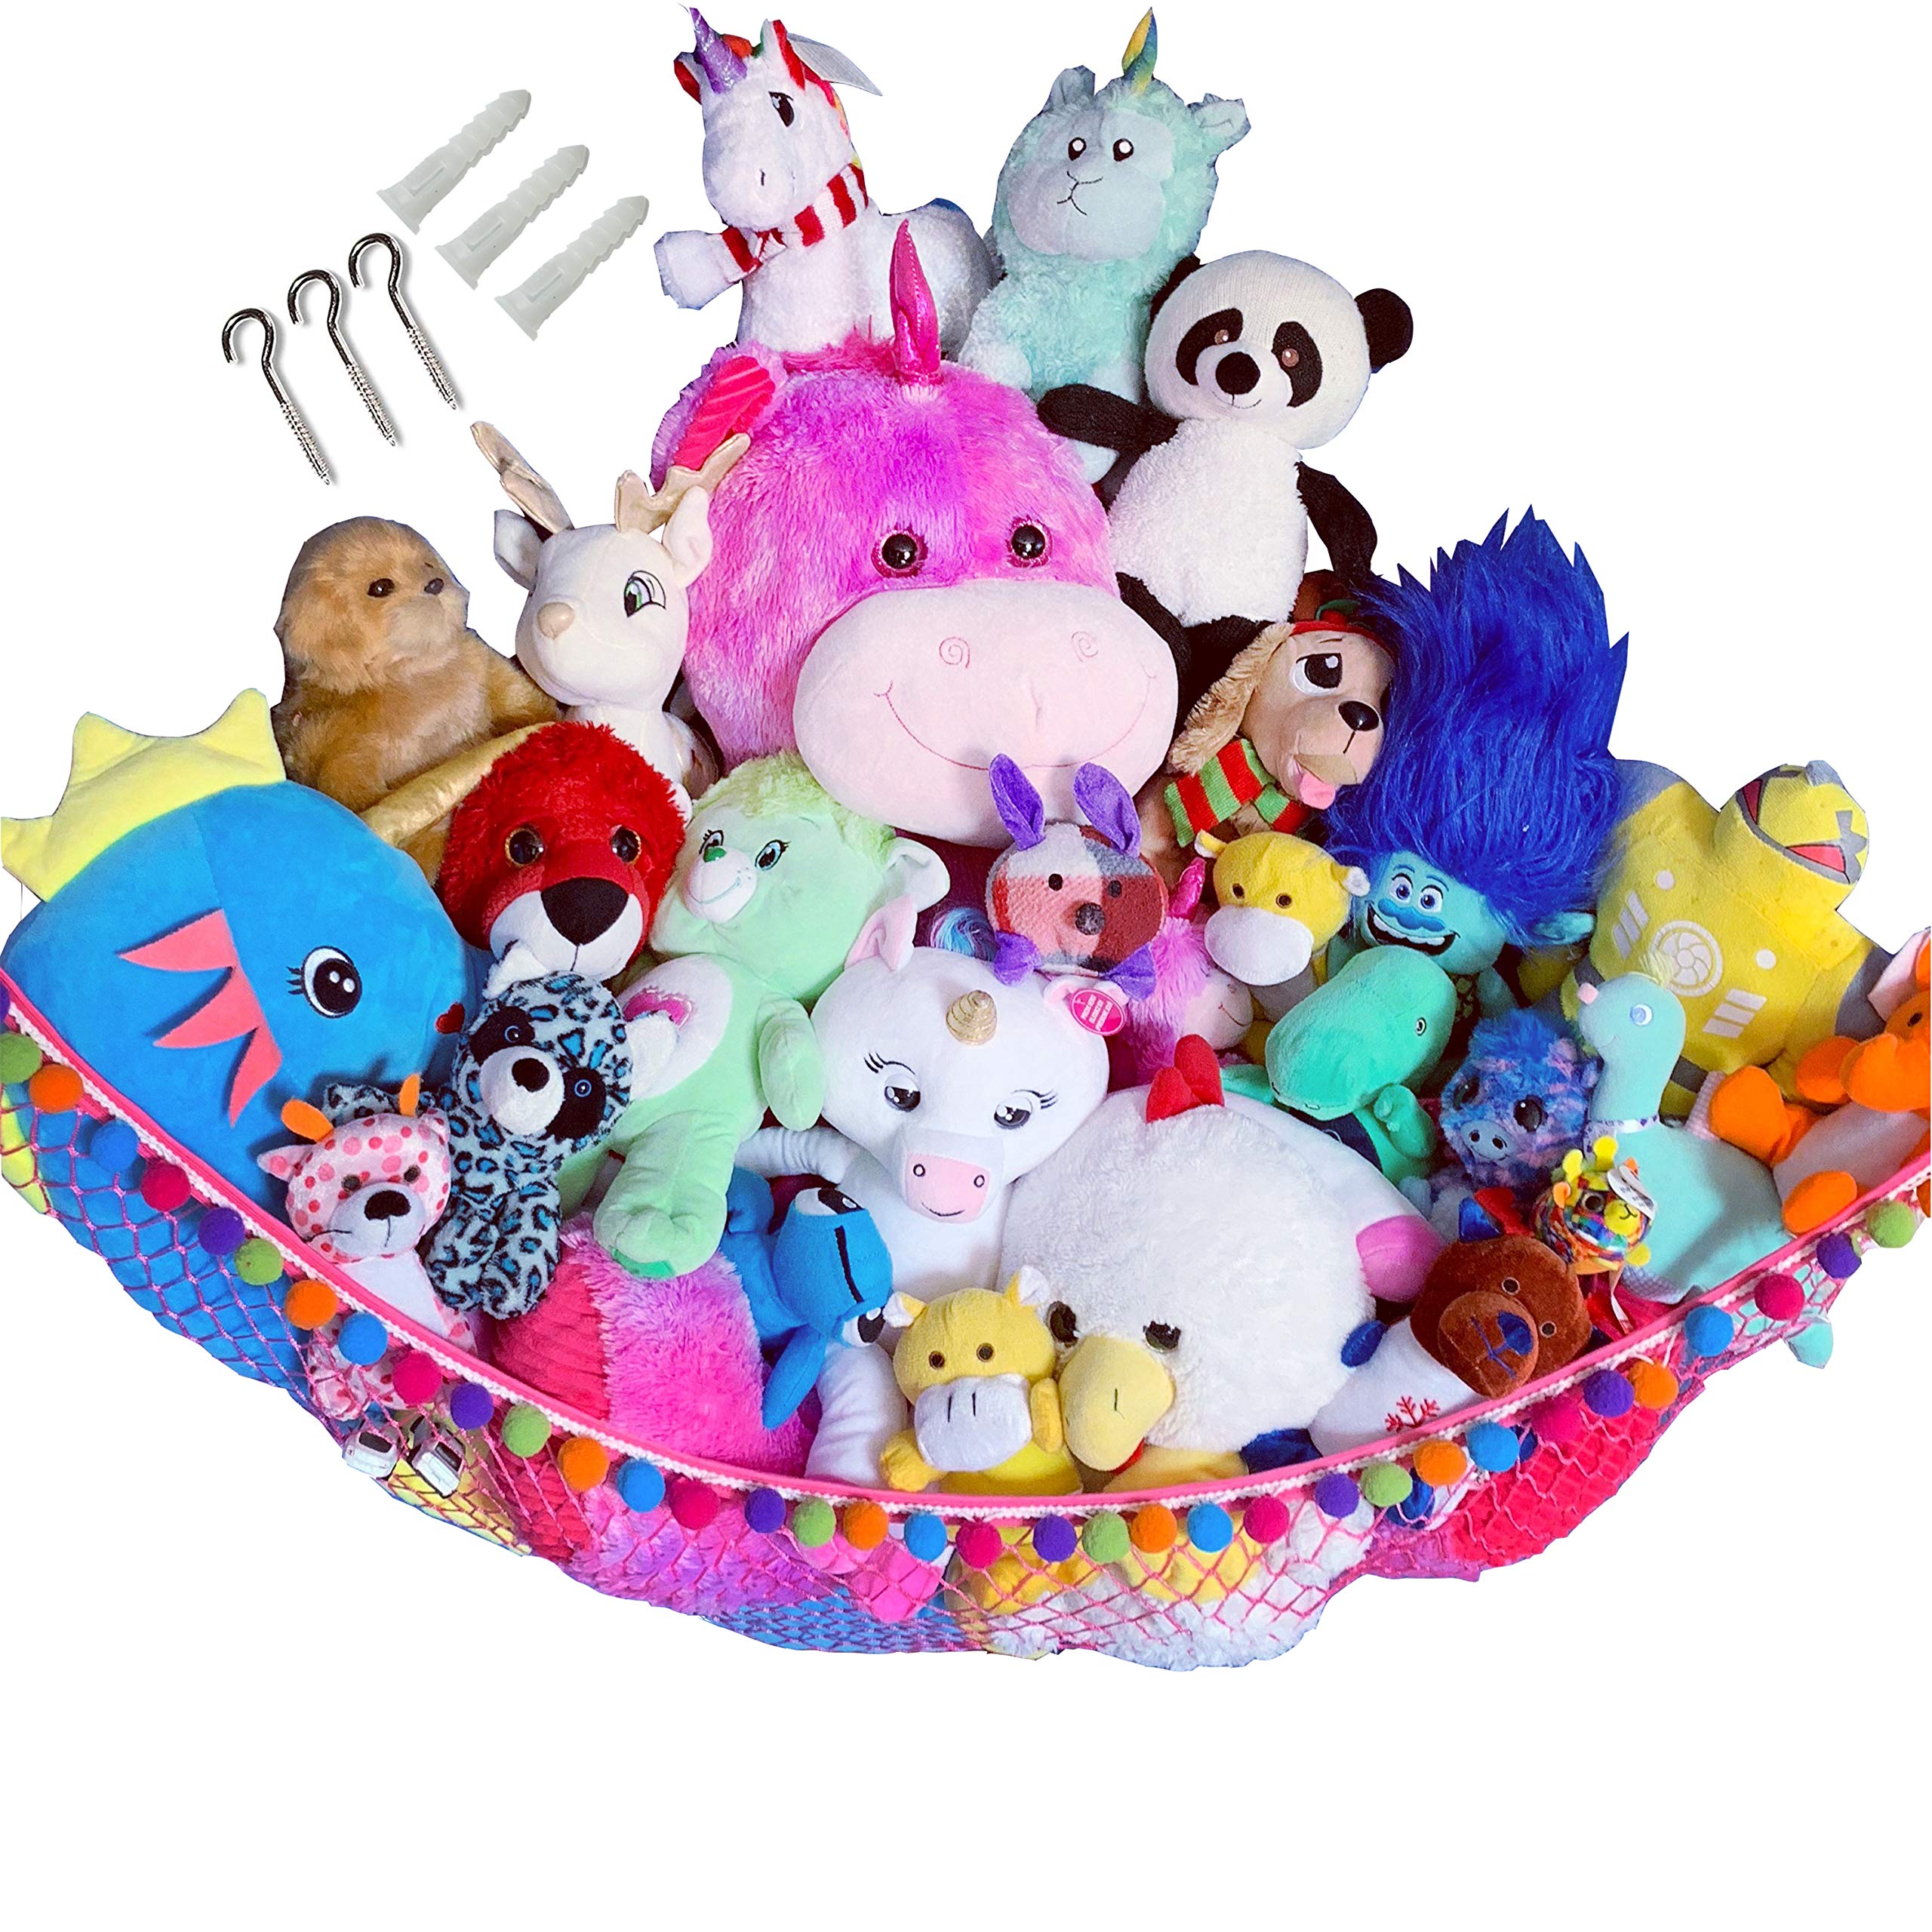 HOME4 Plush Animal Teddy Bear Hanging Storage Toys Hammock Net With Fun  Poms Poms - Organize Small, Large, giant Stuffed Toys Ba